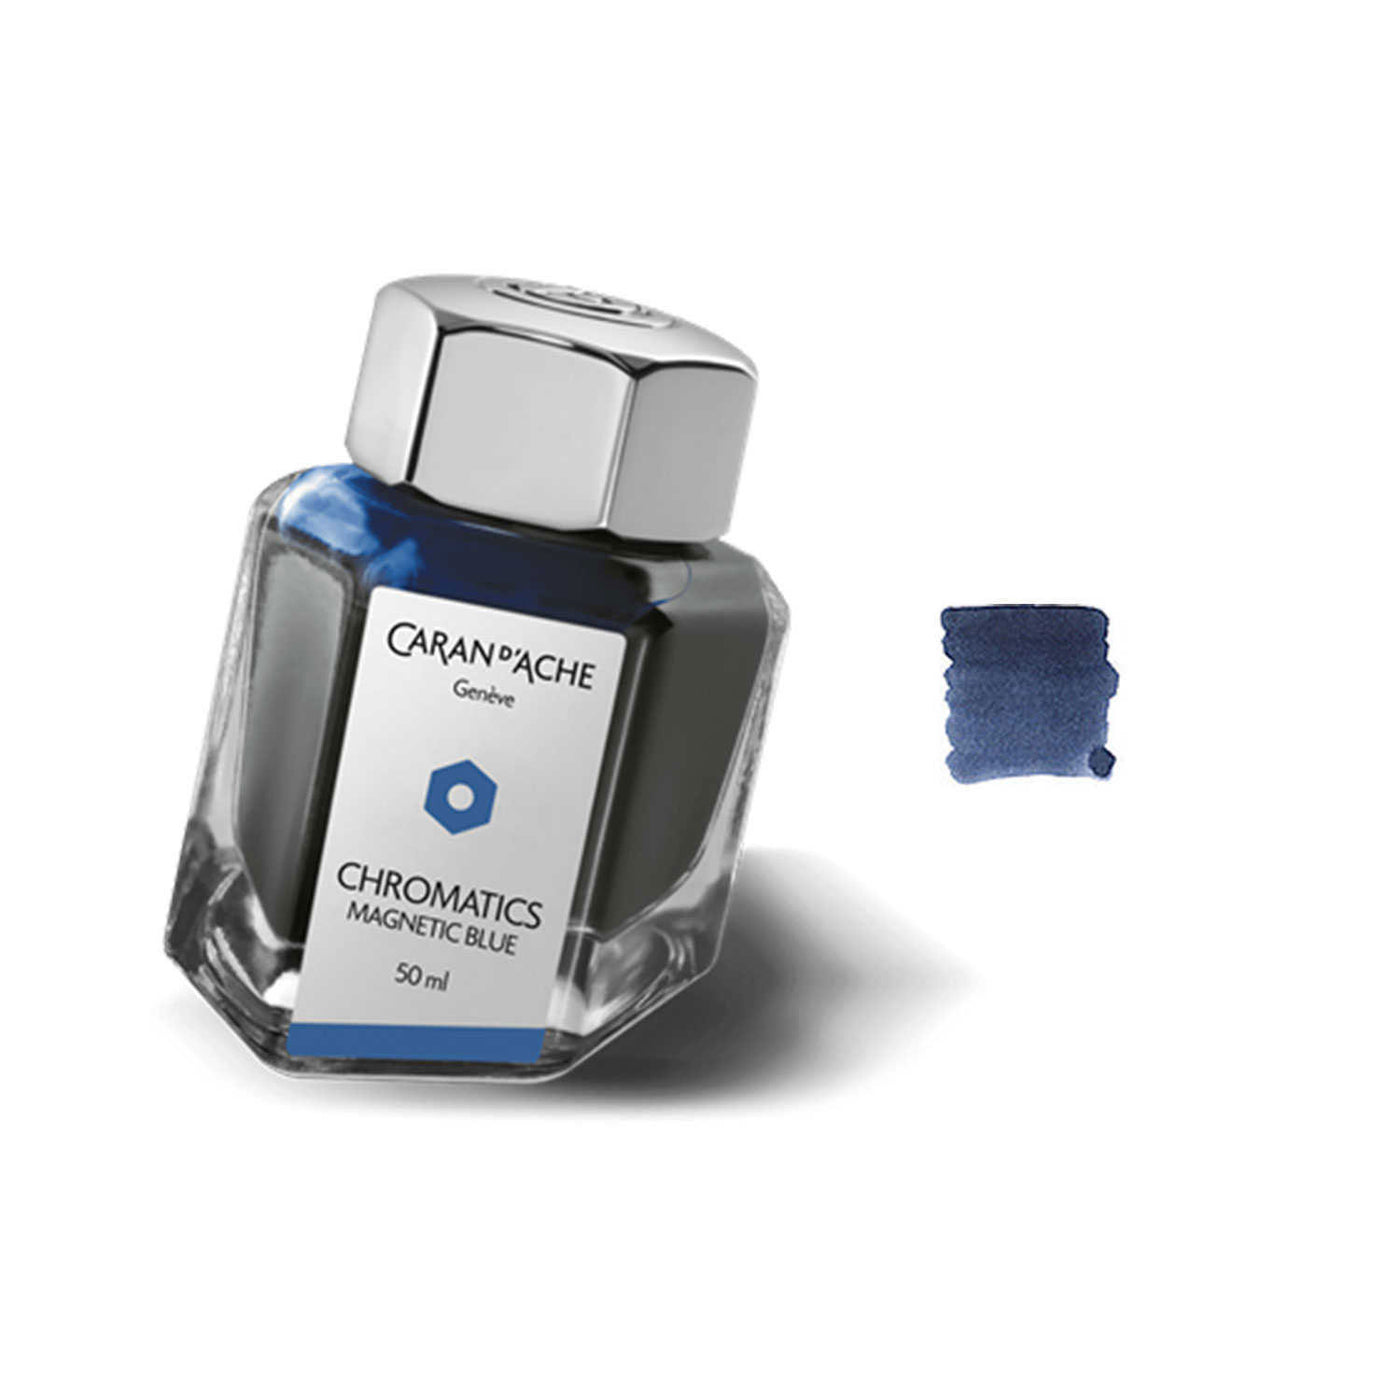 Caran d' Ache Chromatics Ink Bottle Magnetic Blue - 50ml 2